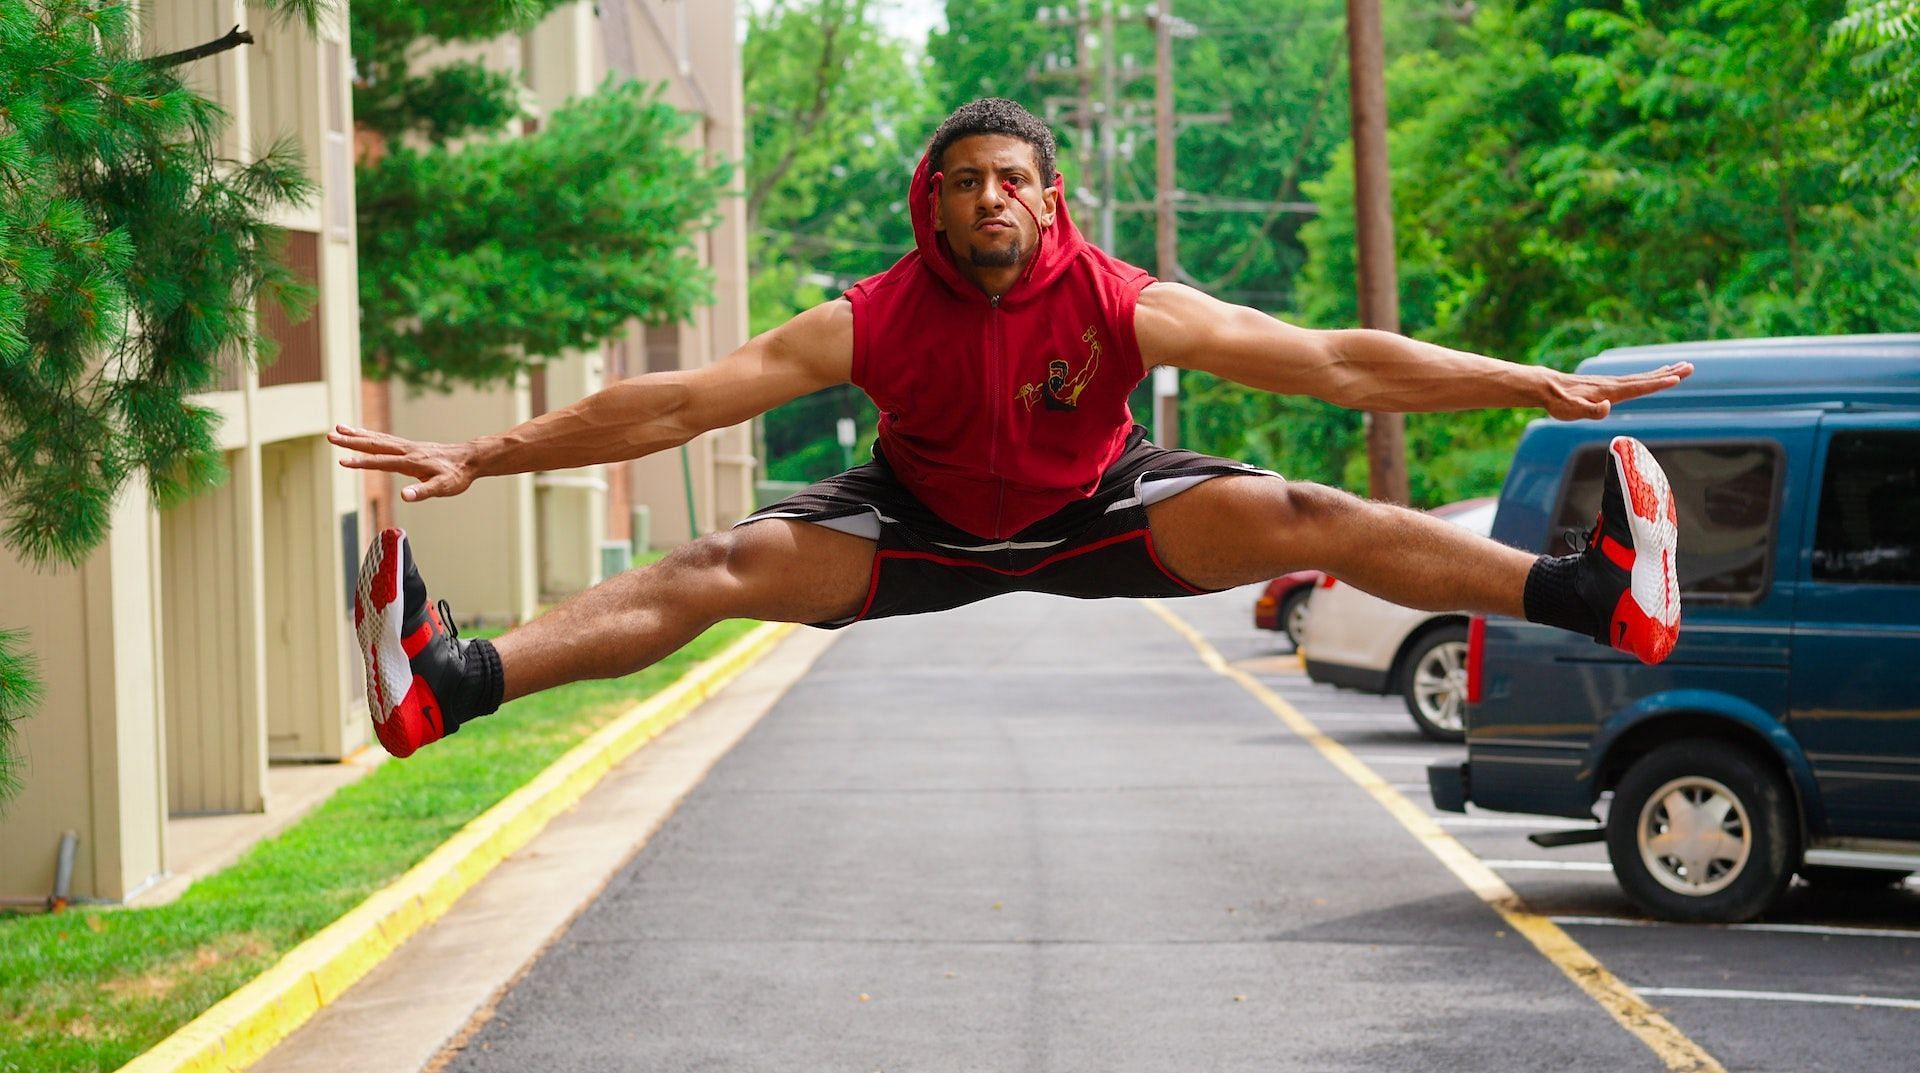 Jumping jacks target the quadriceps, glutes and hip flexors. (Photo via Pexels/Justin Shaifer)